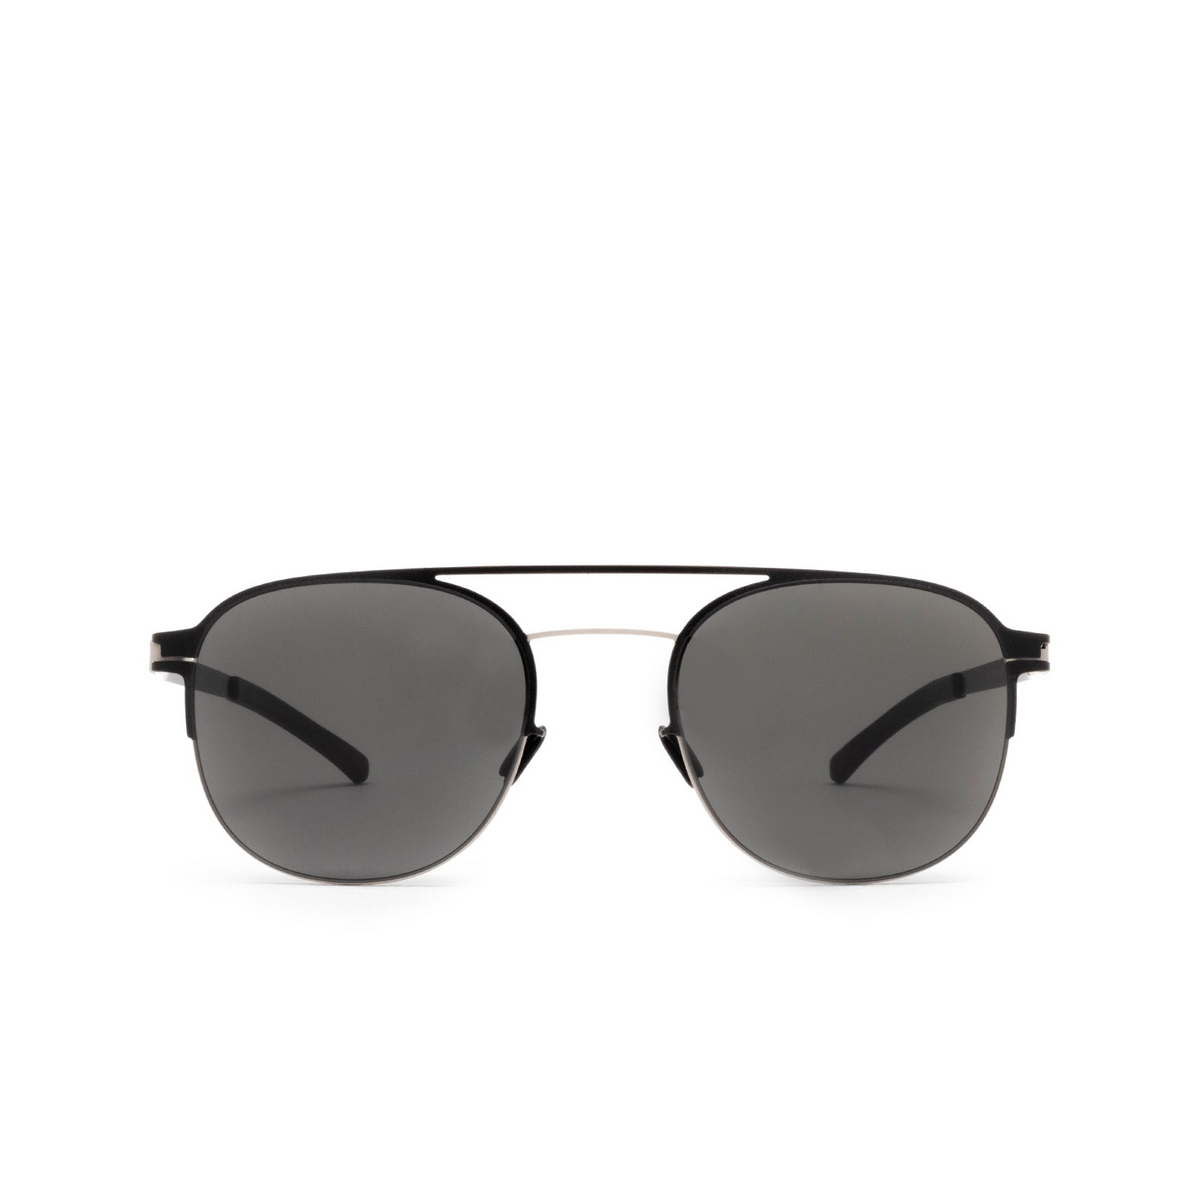 Mykita® Square Sunglasses: Park color 517 Matte Silver/jet Black - front view